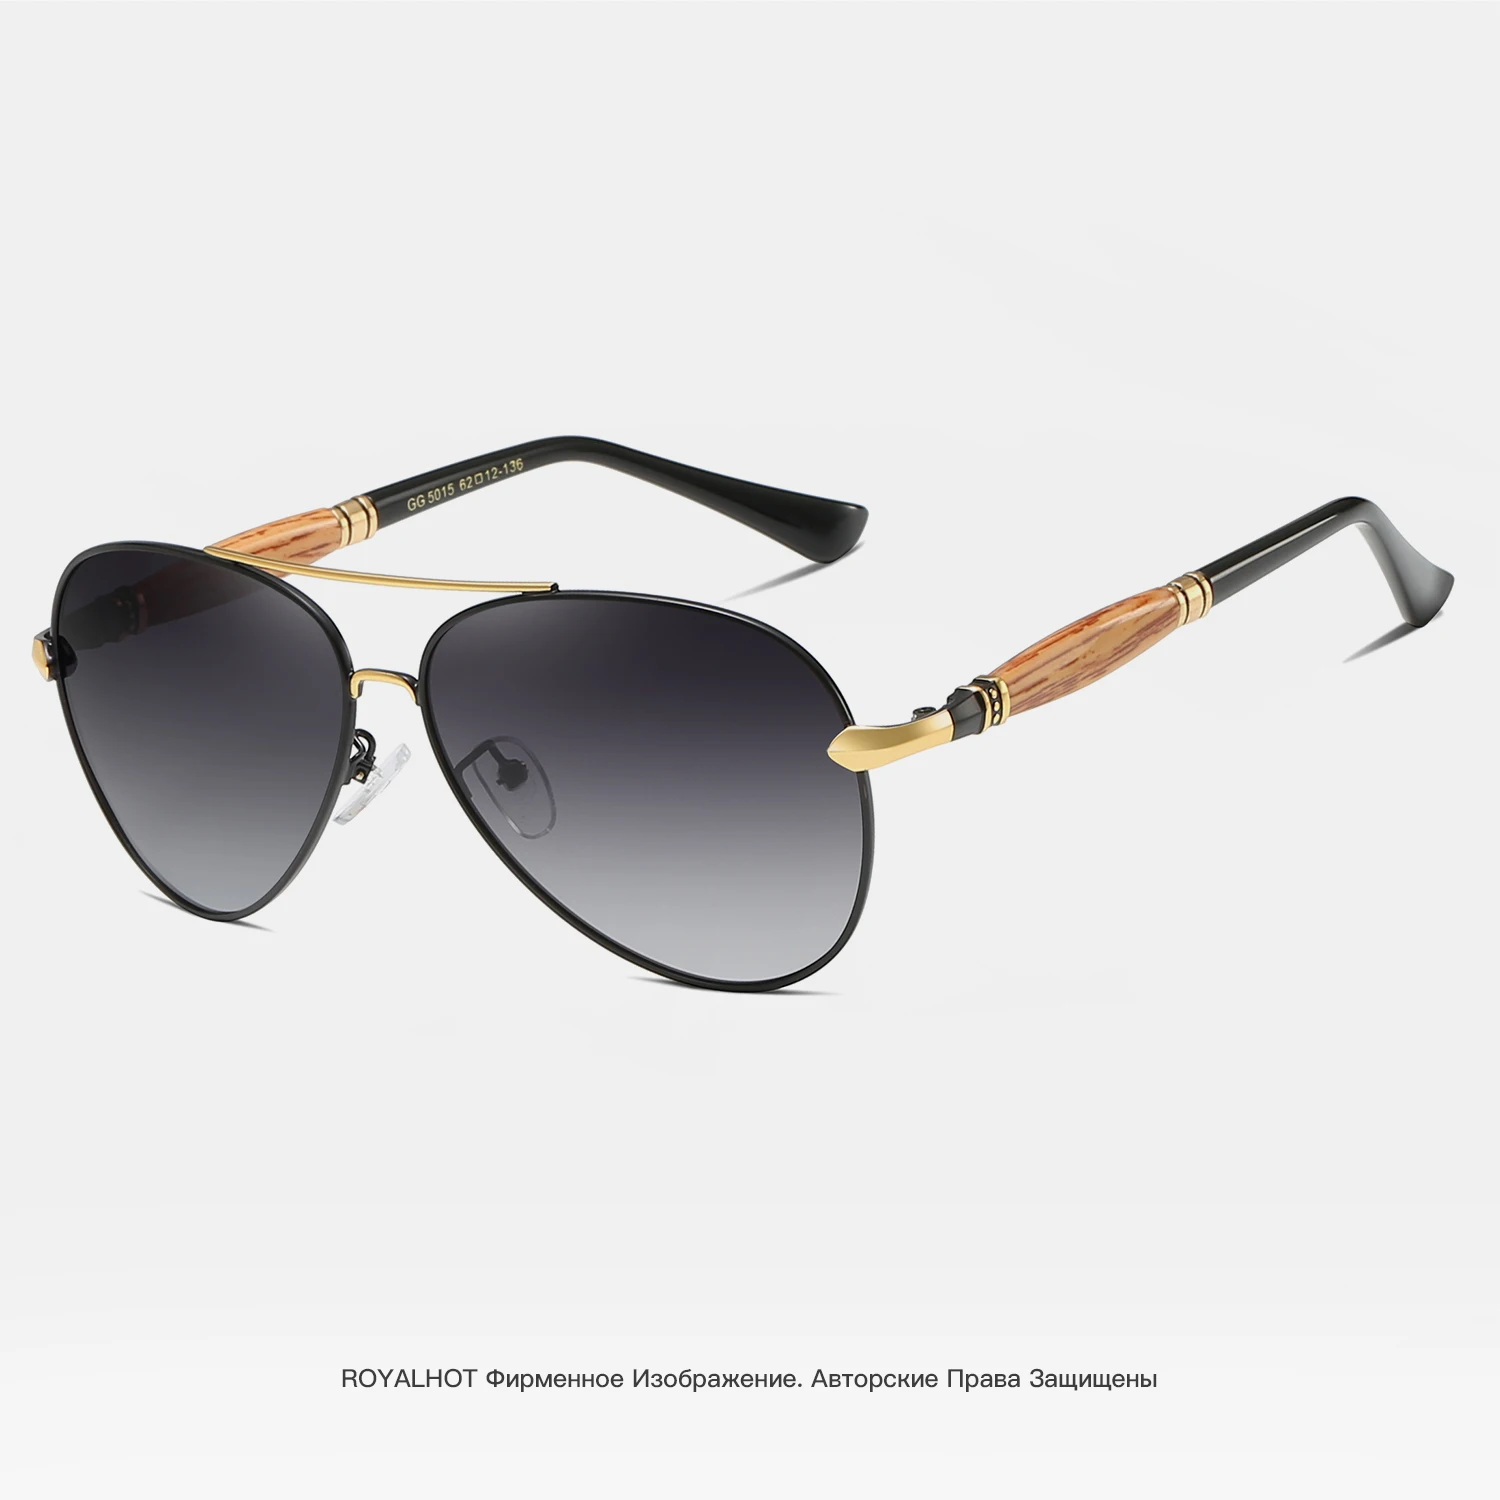 RoyalHot Men Women Polarized Sunglasses Oval Aloy&Wood Frame Sun Glasses Driving Glasses Shades Oculos masculino Male 900151